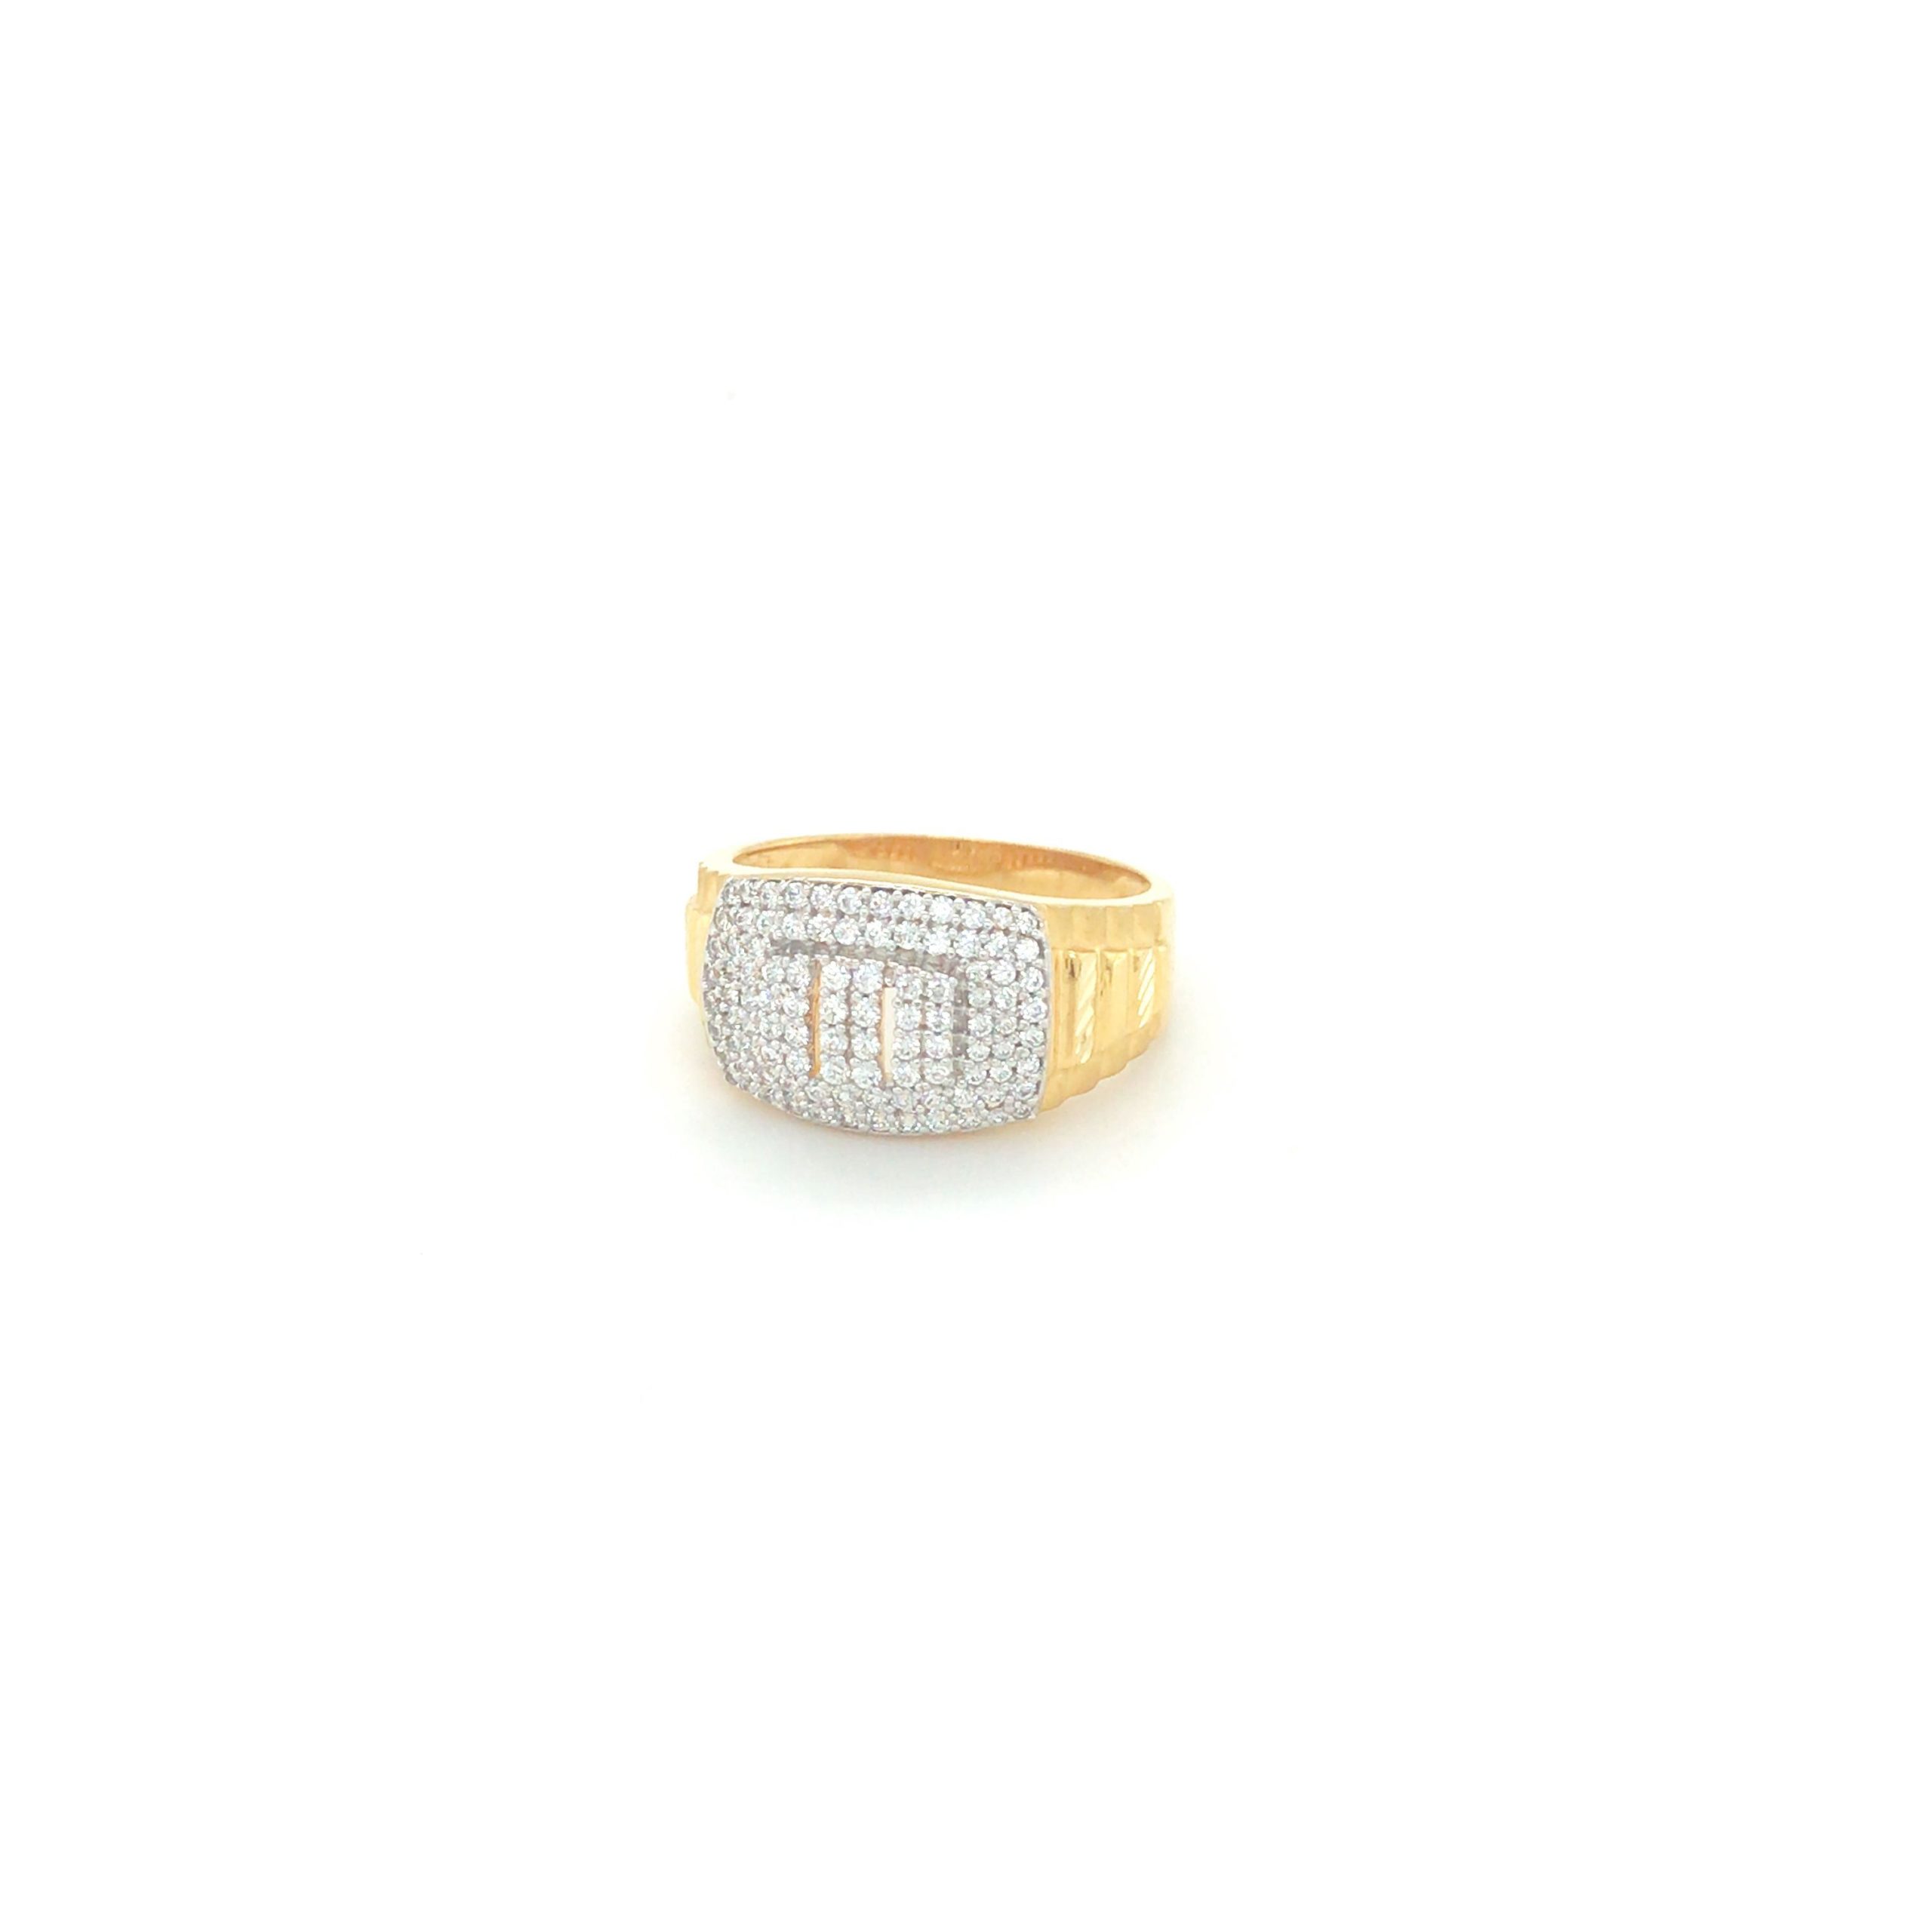 Vintage Mens Square Face Diamond Ring 14K Yellow Gold